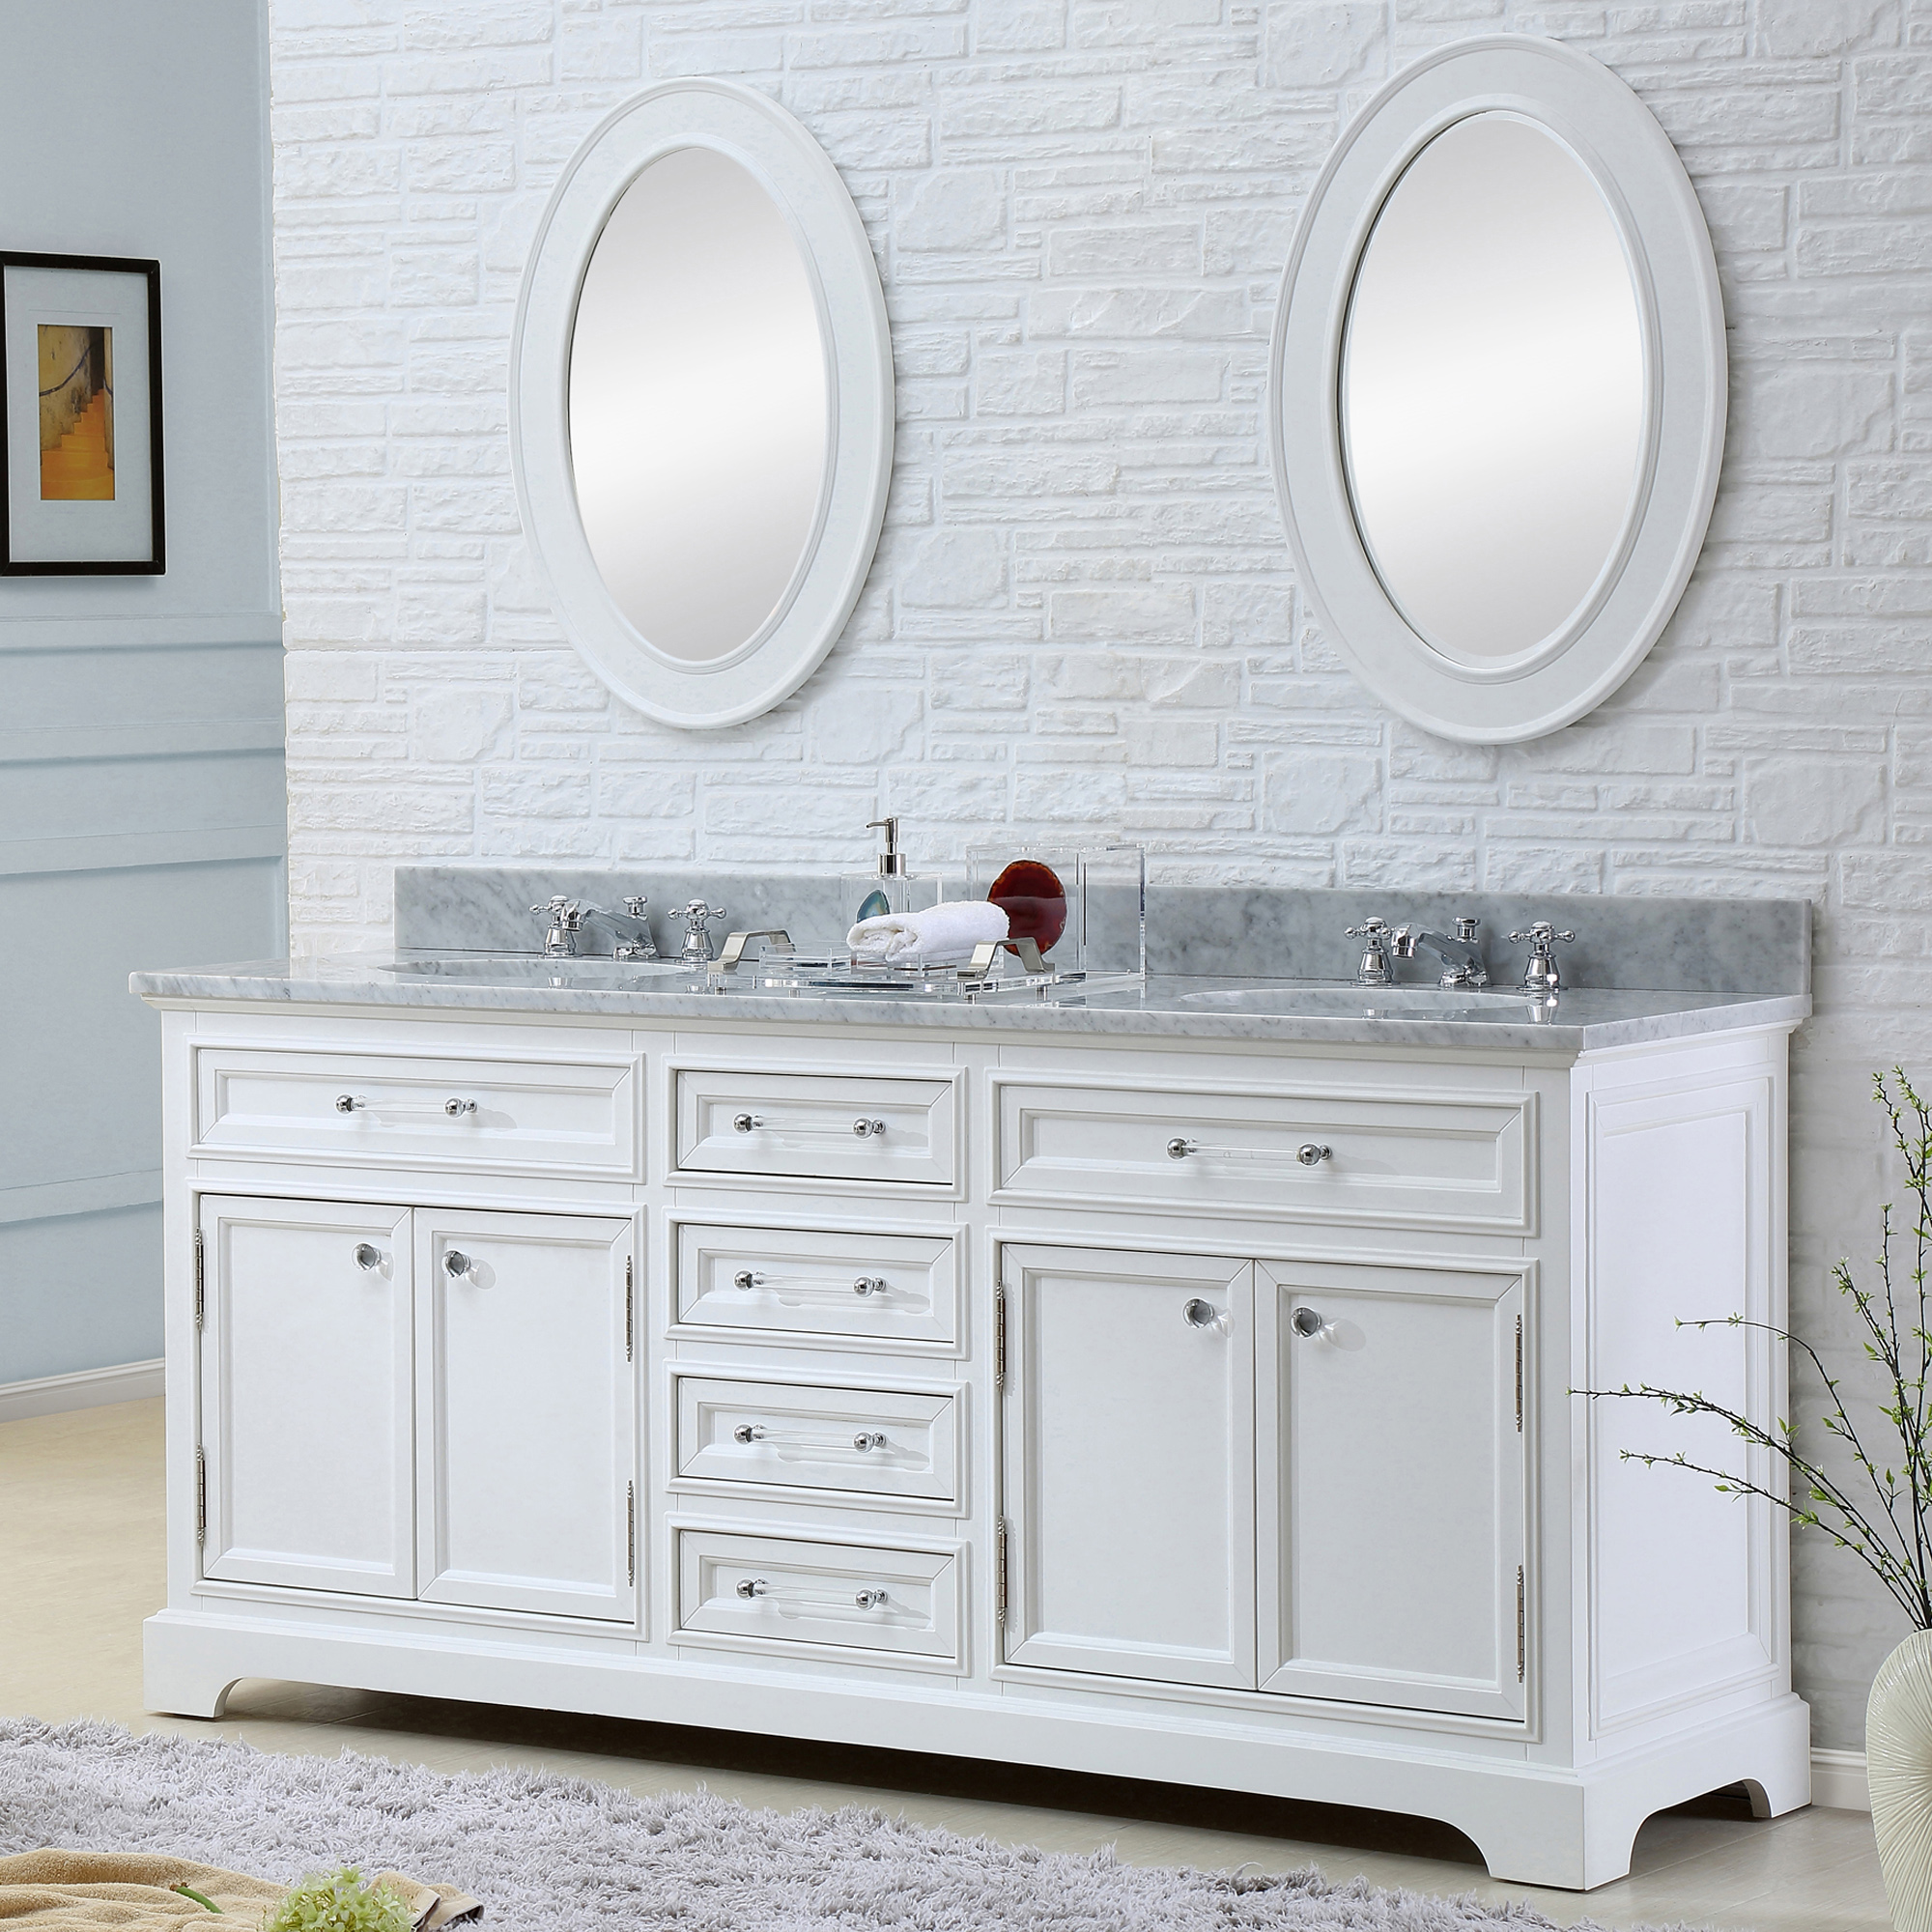 72" Pure White Double Sink Bathroom Vanity with Carrara